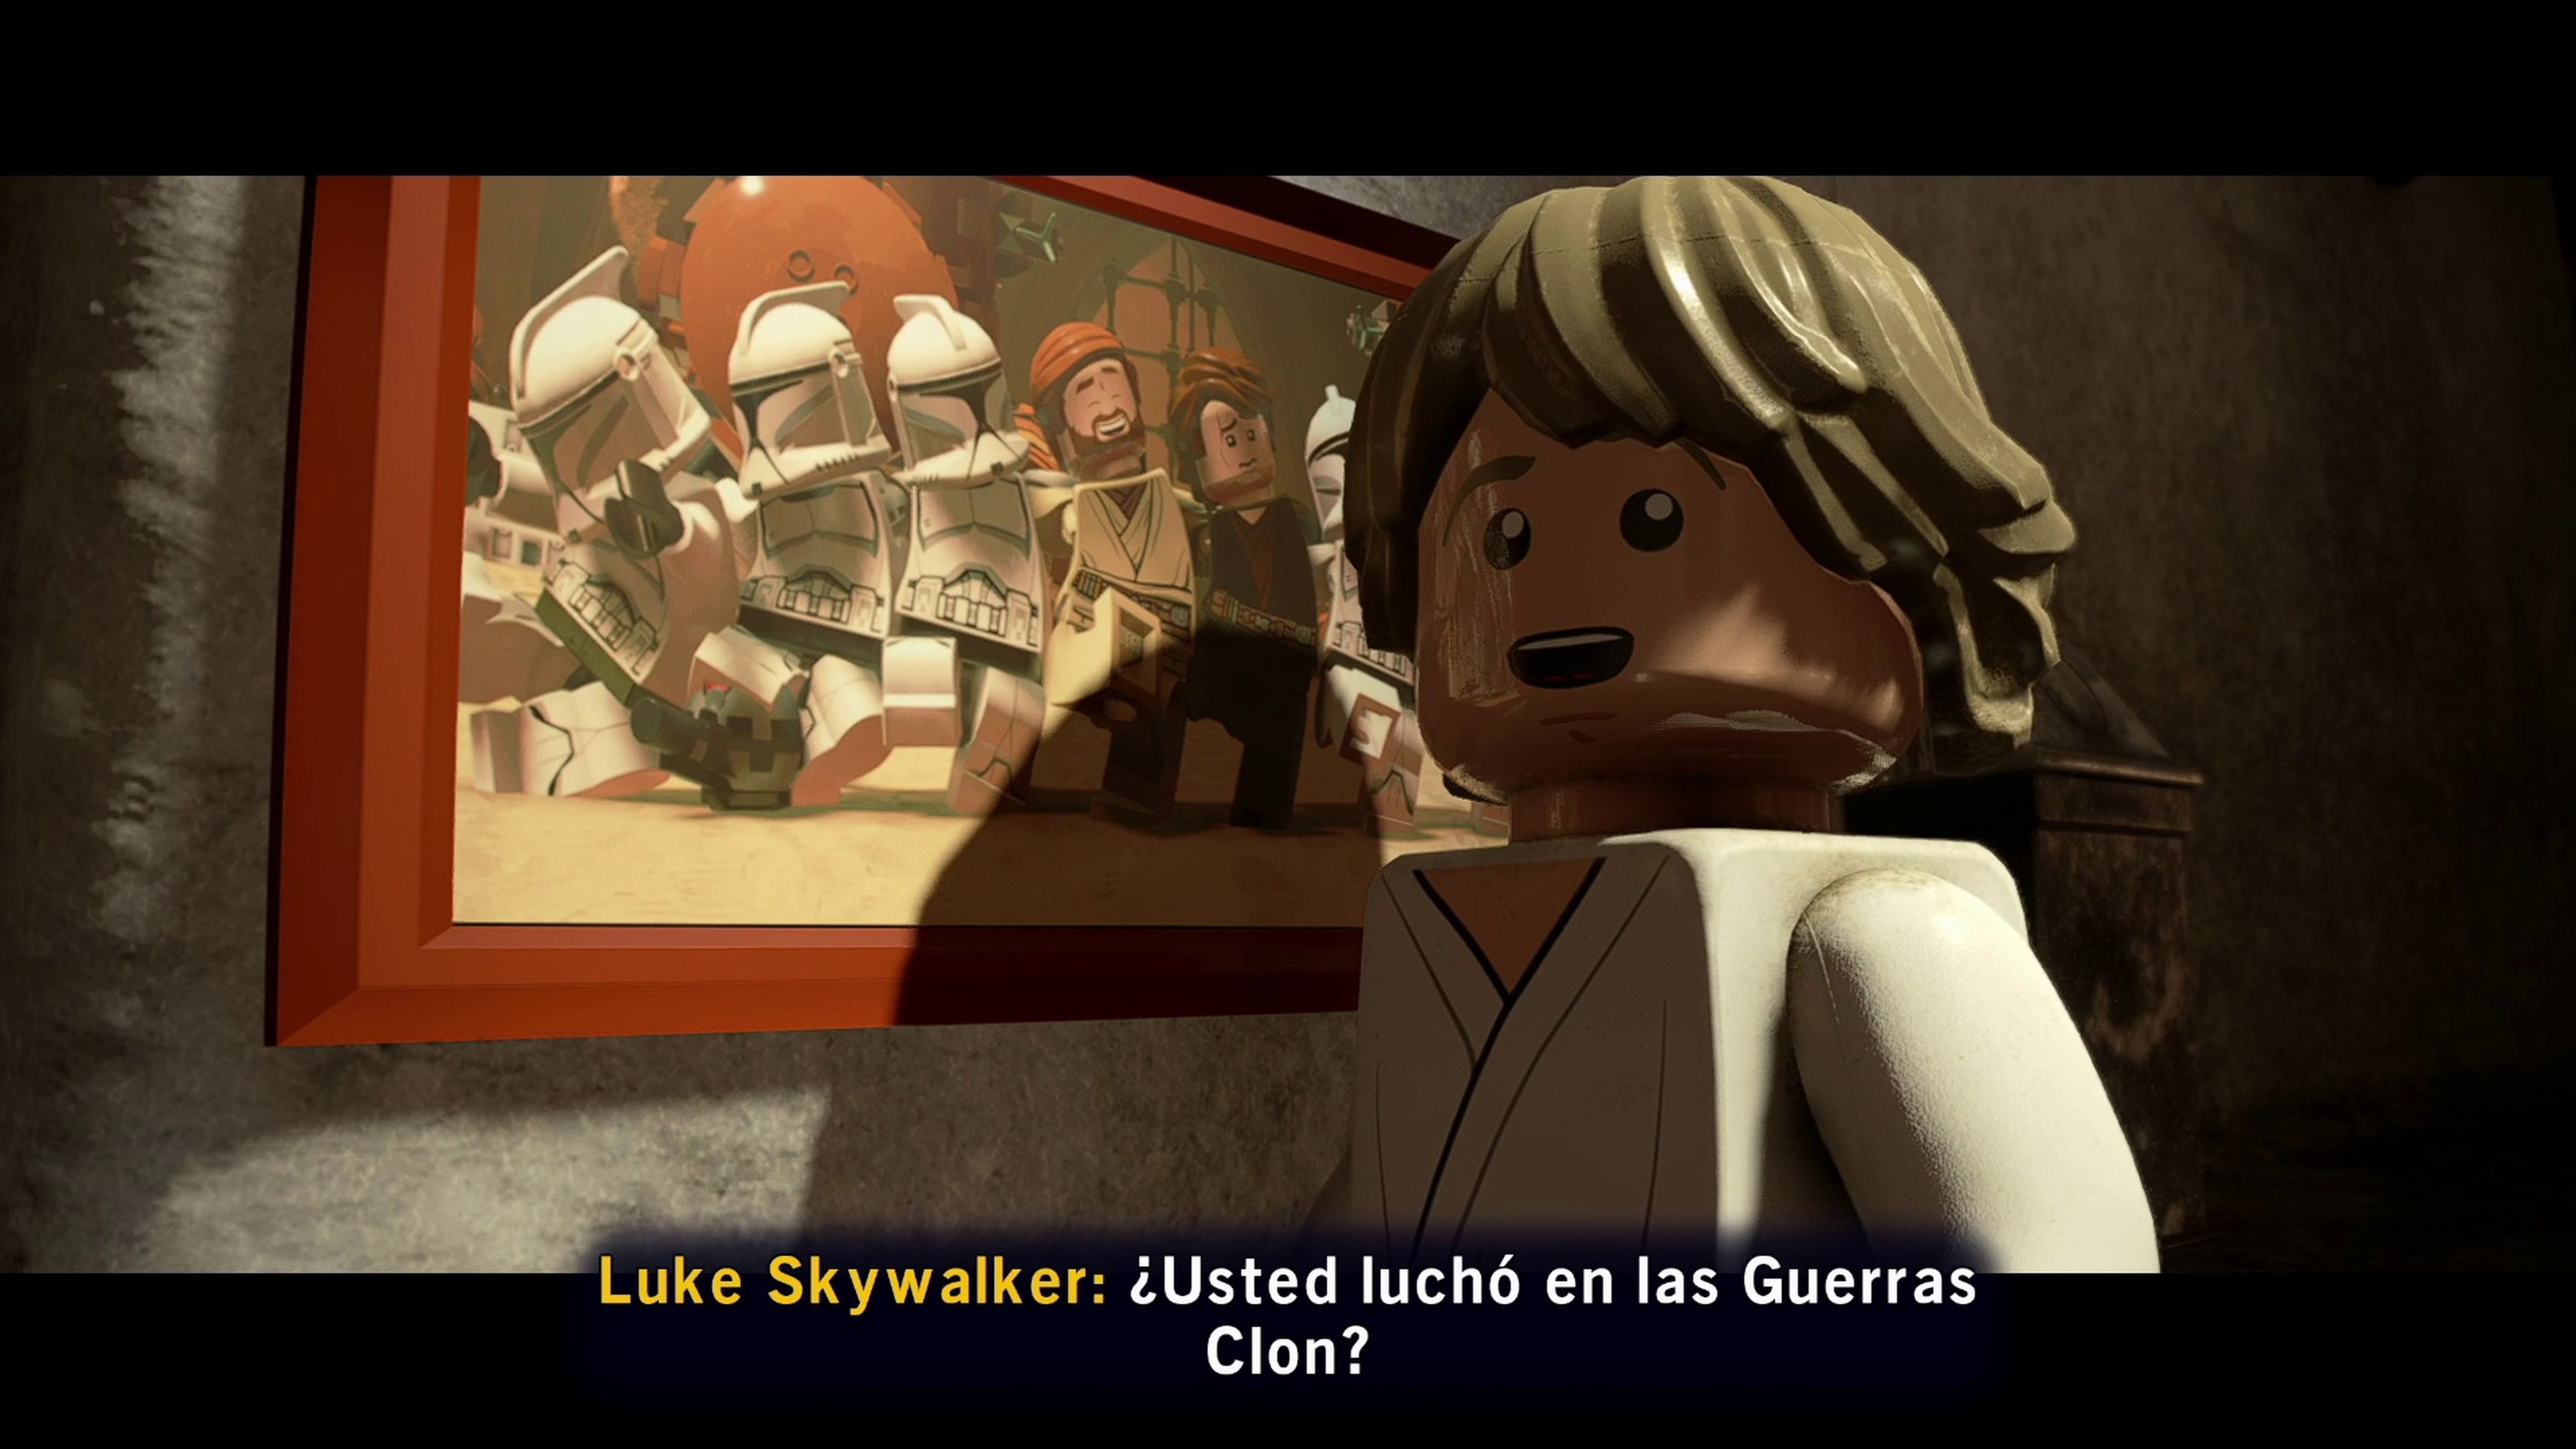 LEGO Star Wars: La Saga Skywalker